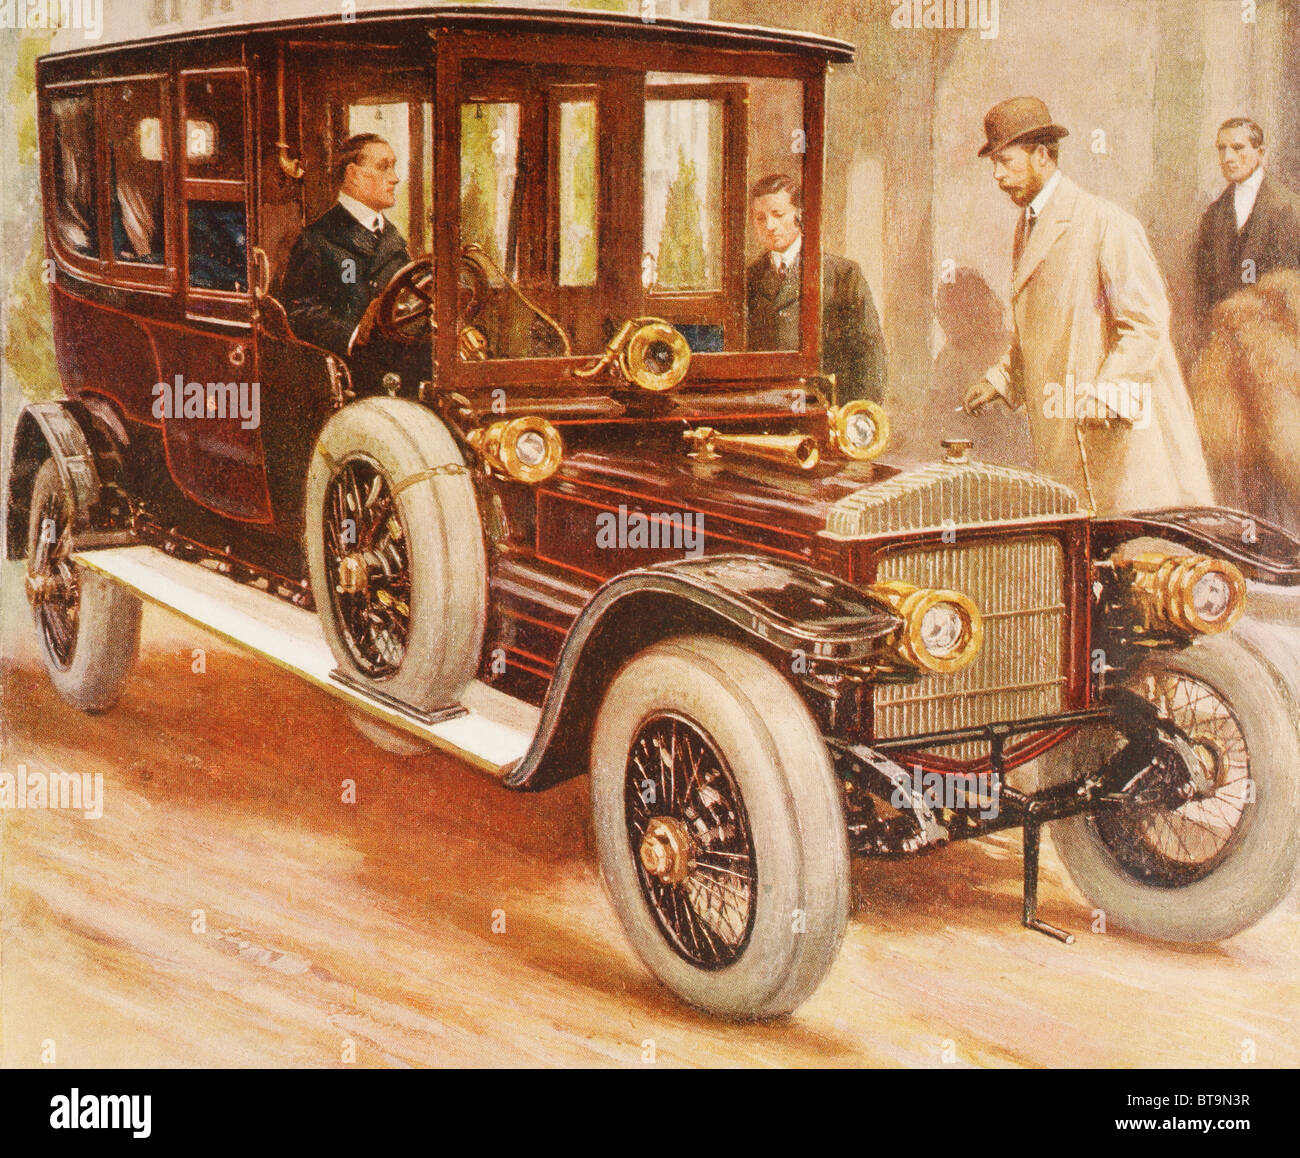 King George V entering his Daimler car. Stock Photo